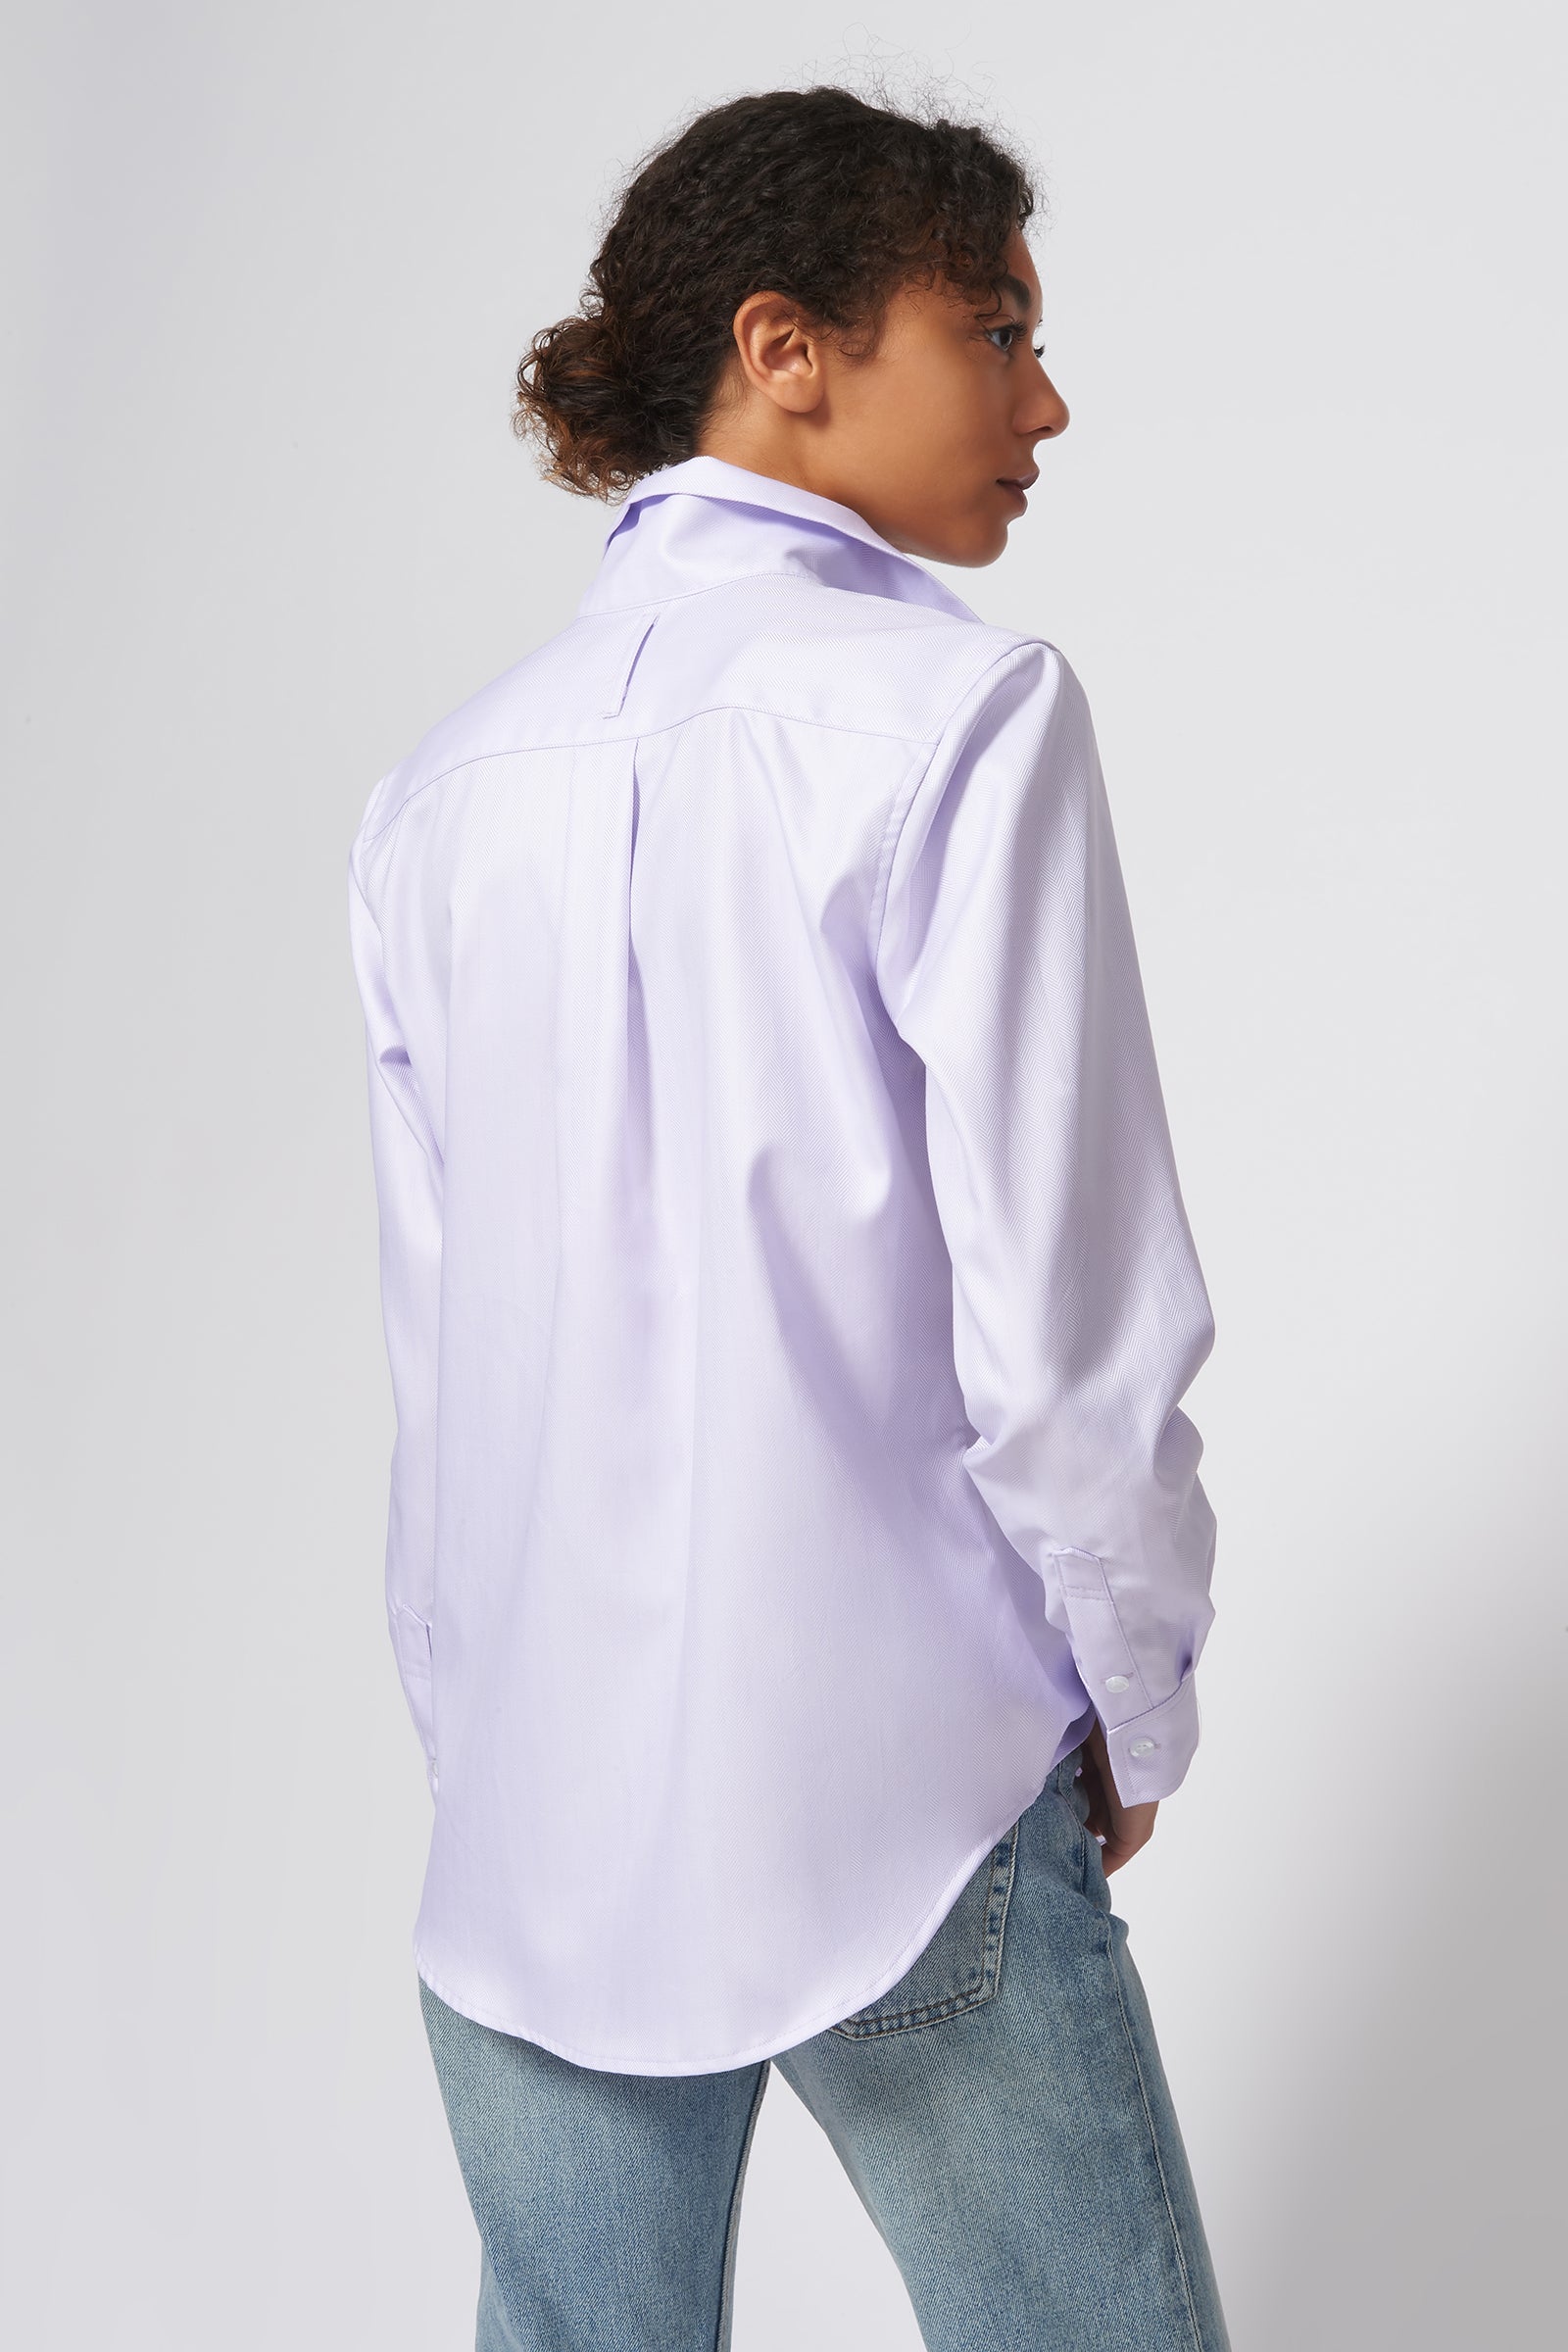 Kal Rieman Ginna Box Pleat Shirt in Lavendar Fine Herringbone on Model Full Back View